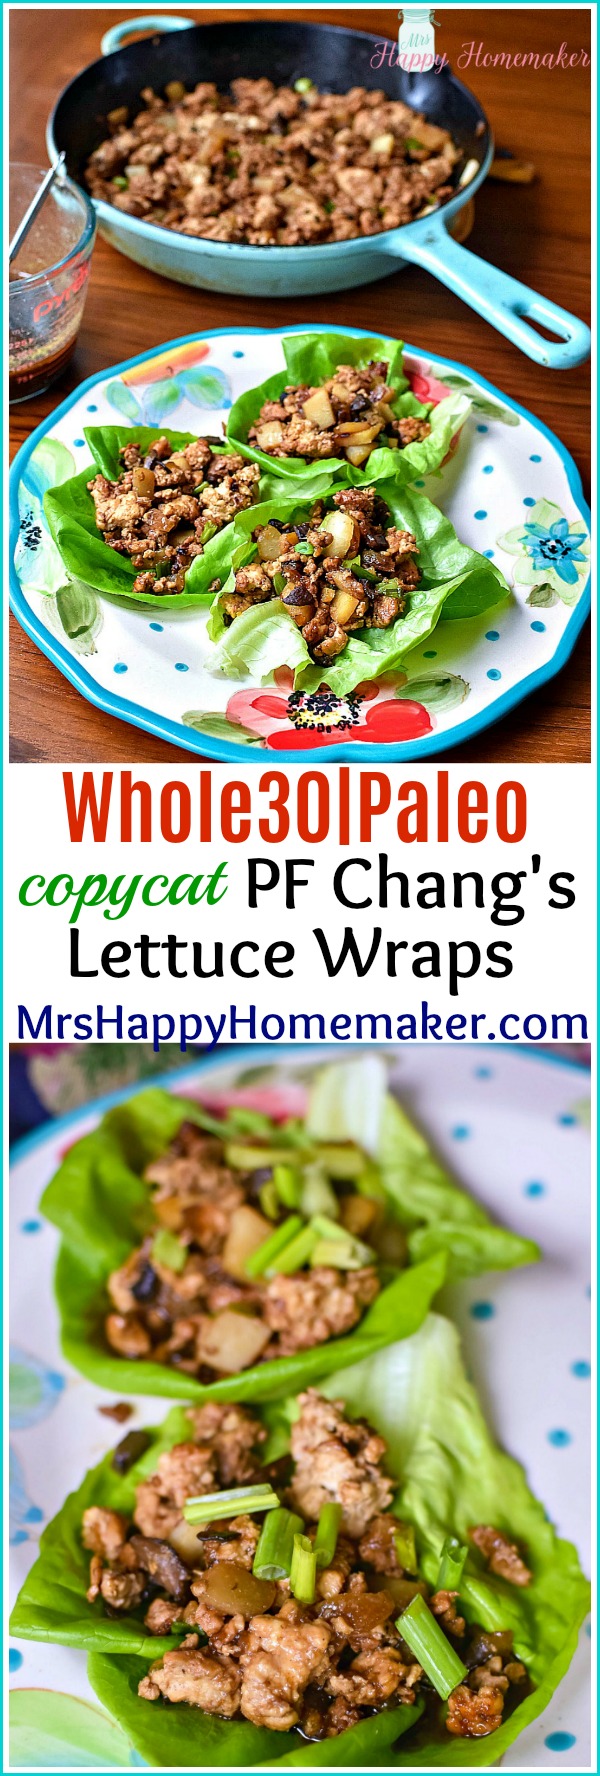 Whole30|Paleo Copycat PF Chang's Lettuce Wraps | MrsHappyHomemaker.com @thathousewife